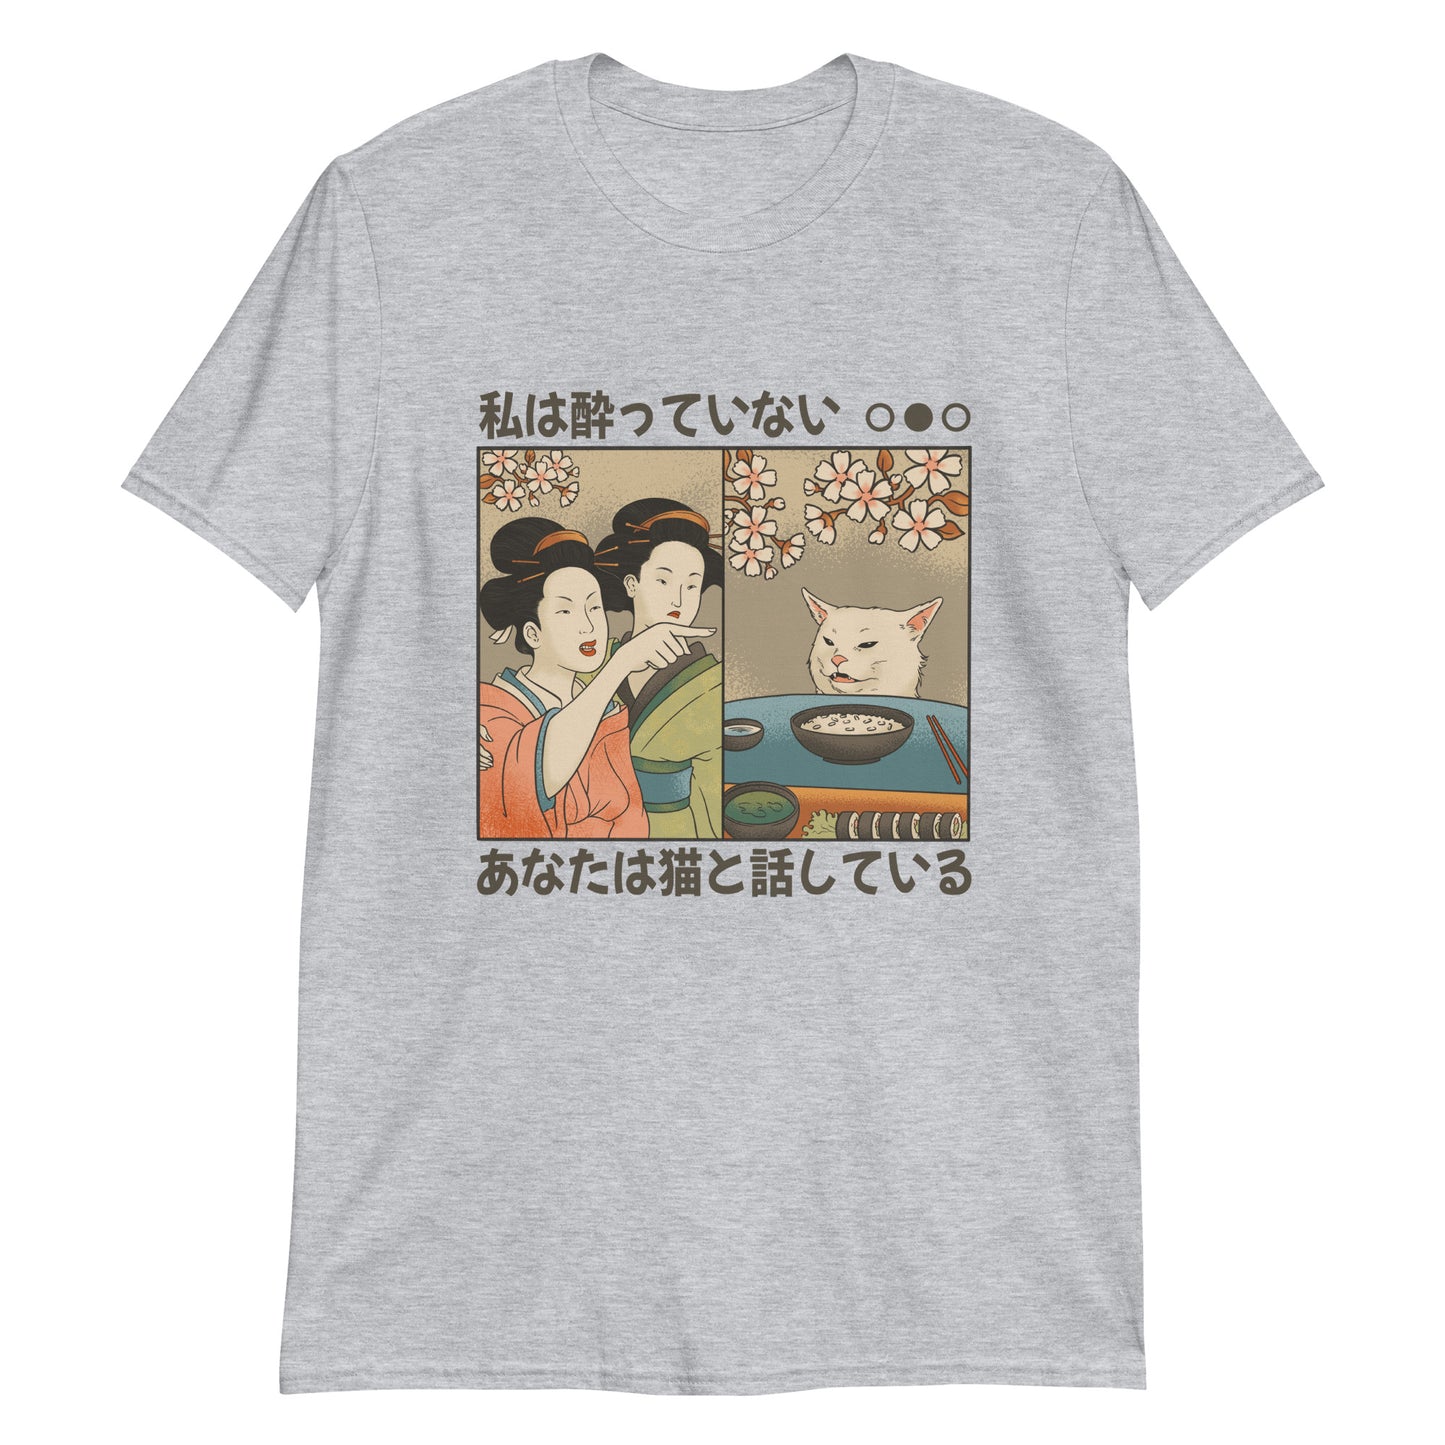 Japanese Aesthetic, Meme, Woman Shouting On Cat T-Shirt